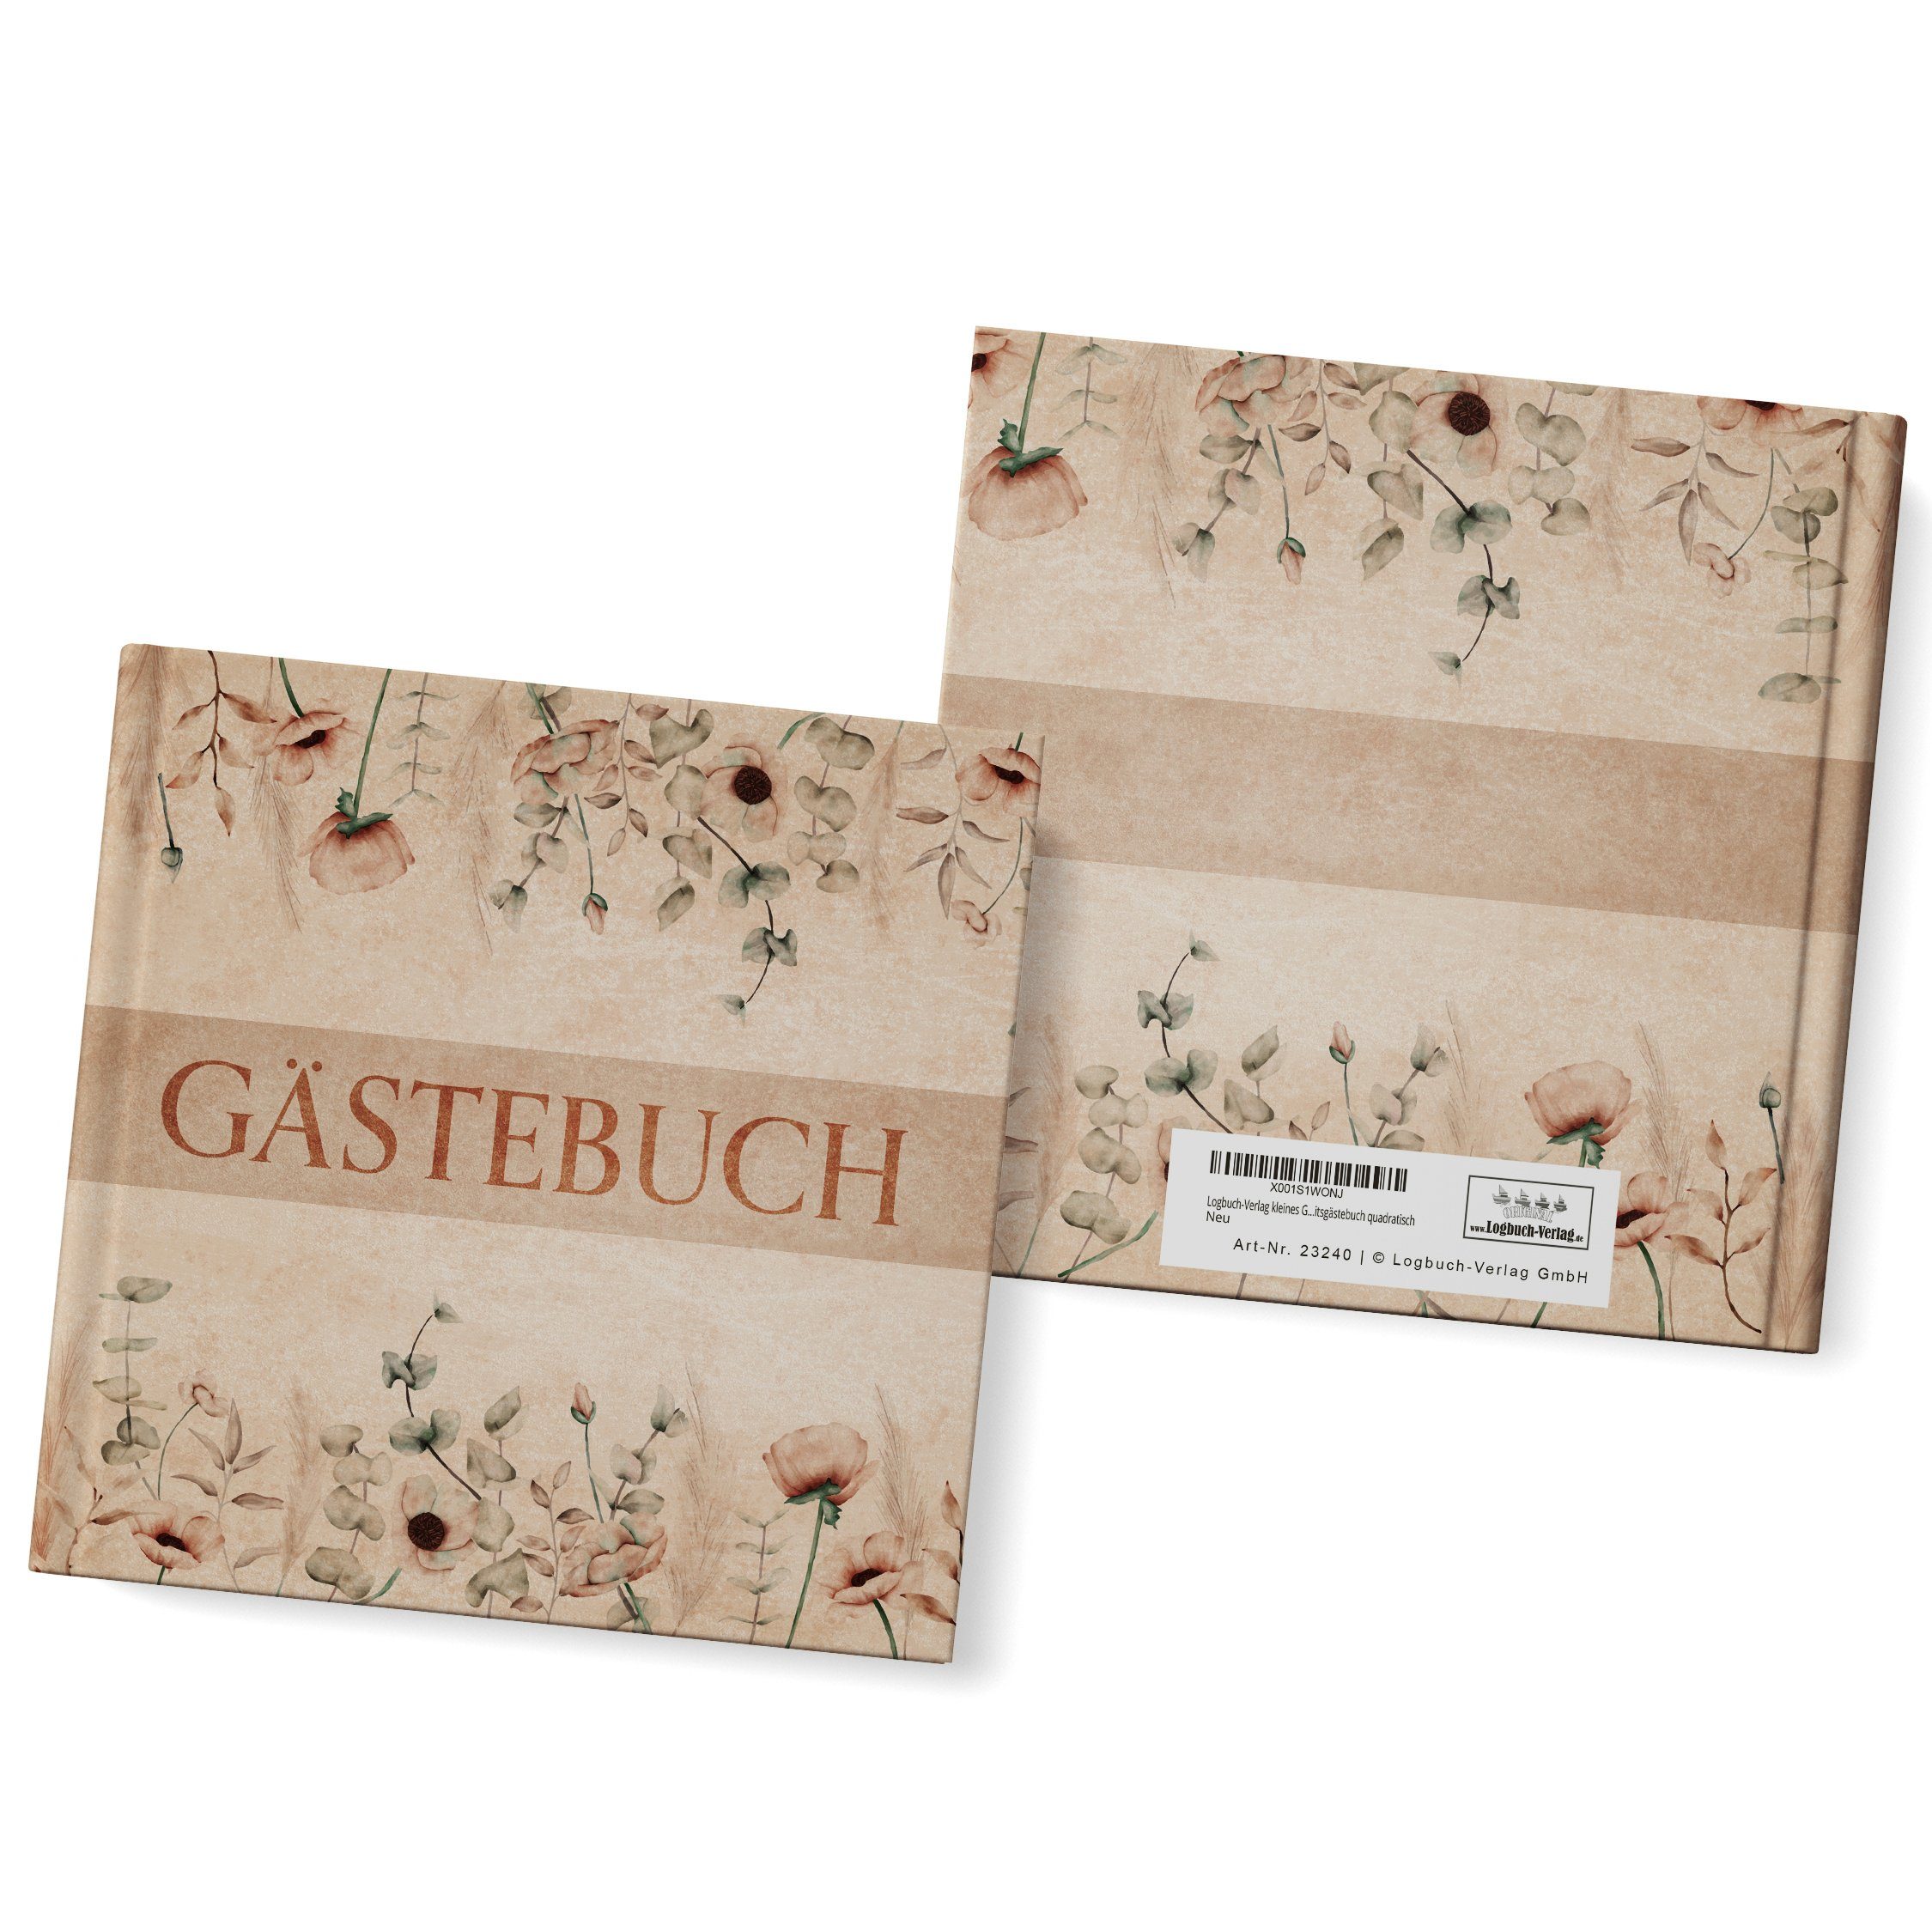 15 cm x Hochzeit kleines boho Gästebuch Tagebuch & Feste 15 Logbuch-Verlag